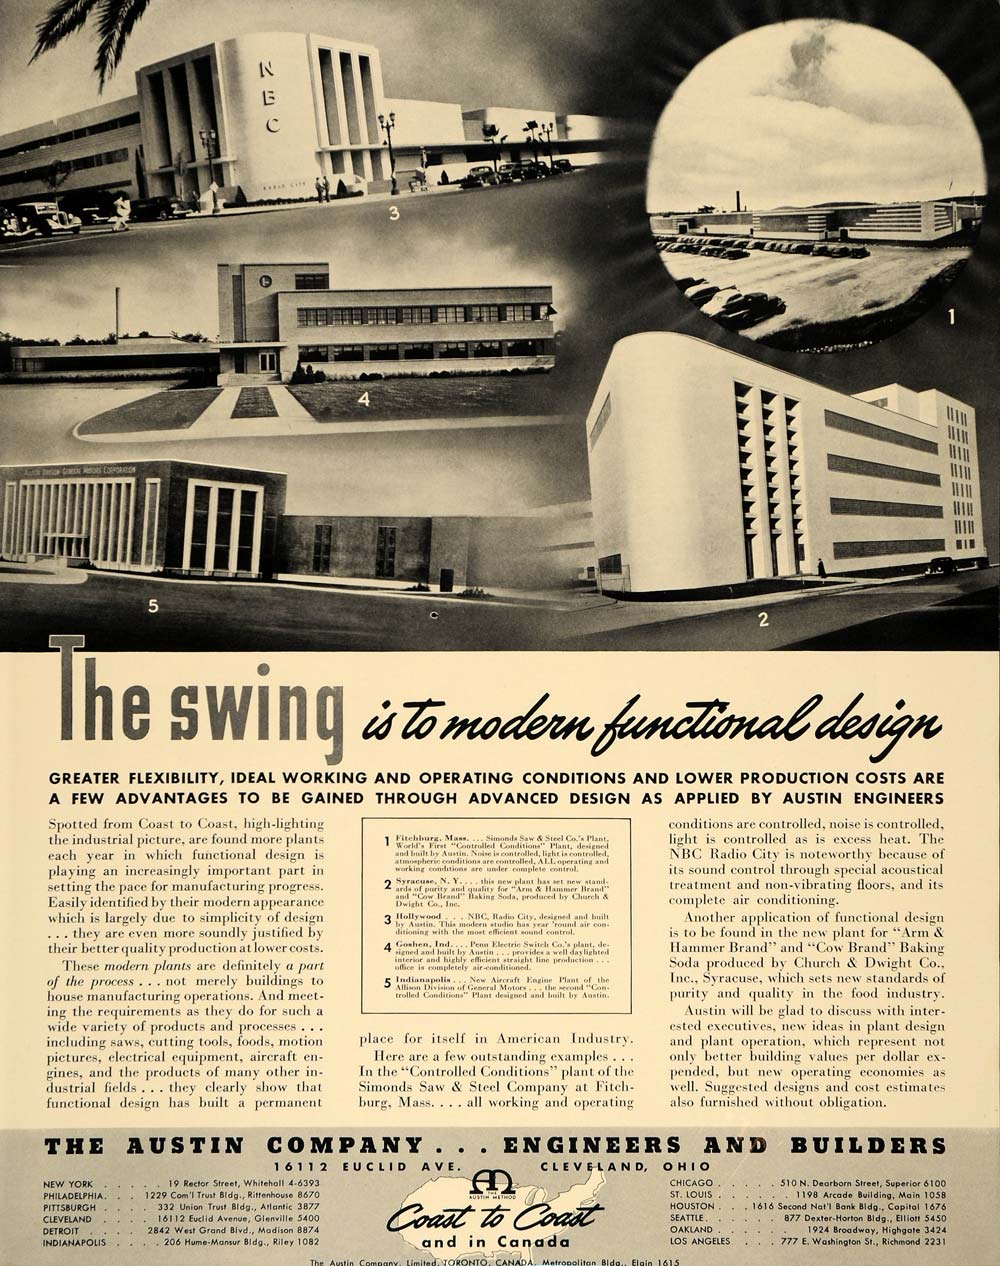 1940 Ad Austin Engineers Builders NBC Radio City Studio - ORIGINAL F6A